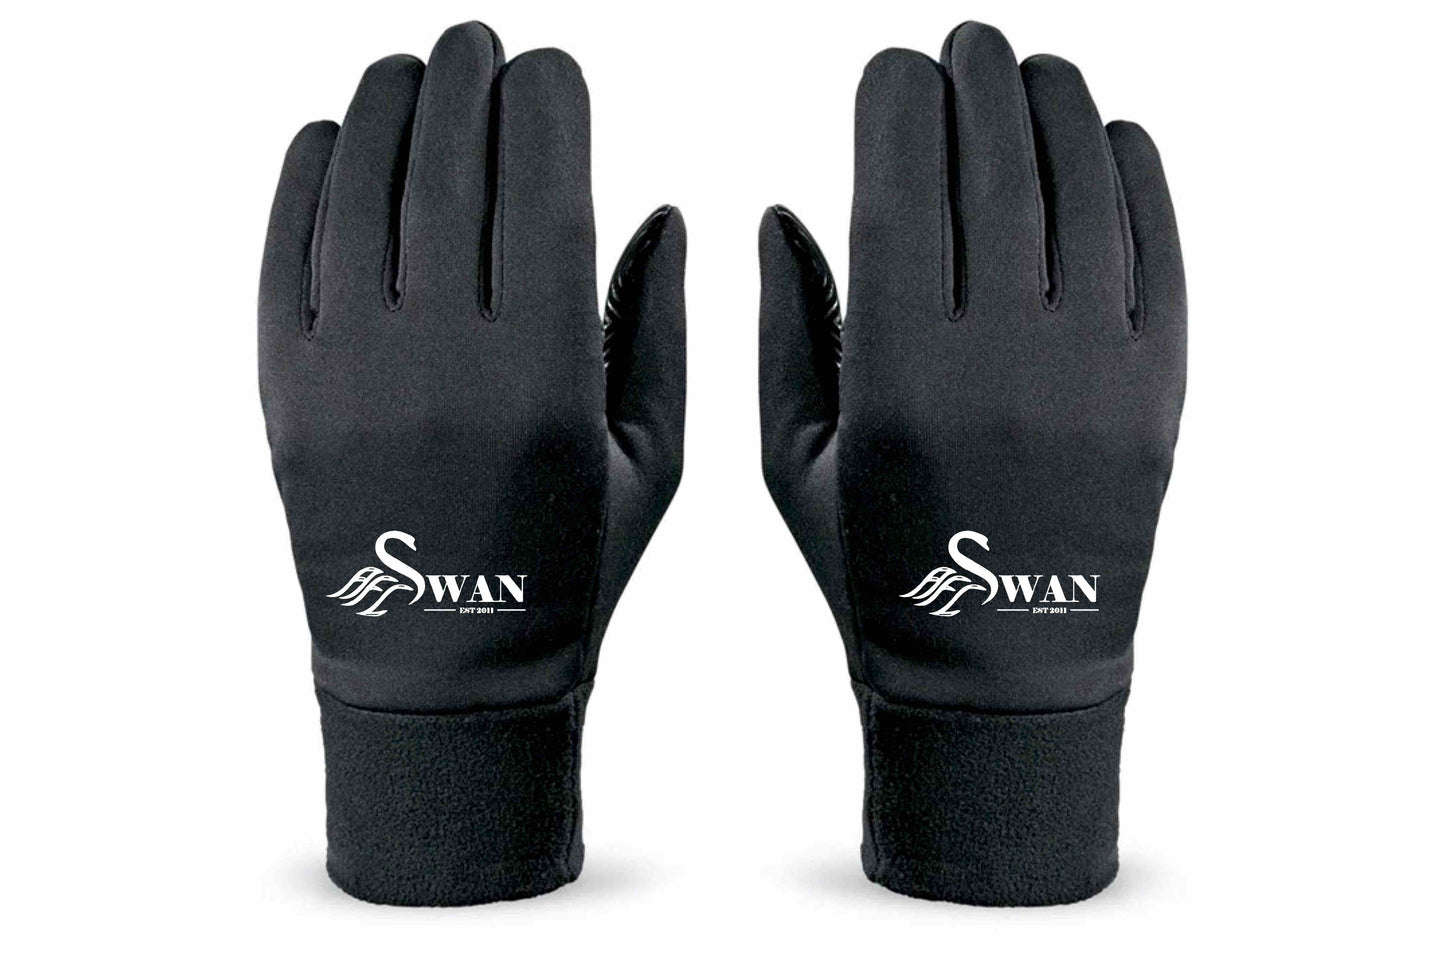 AFC Swan Player Gloves